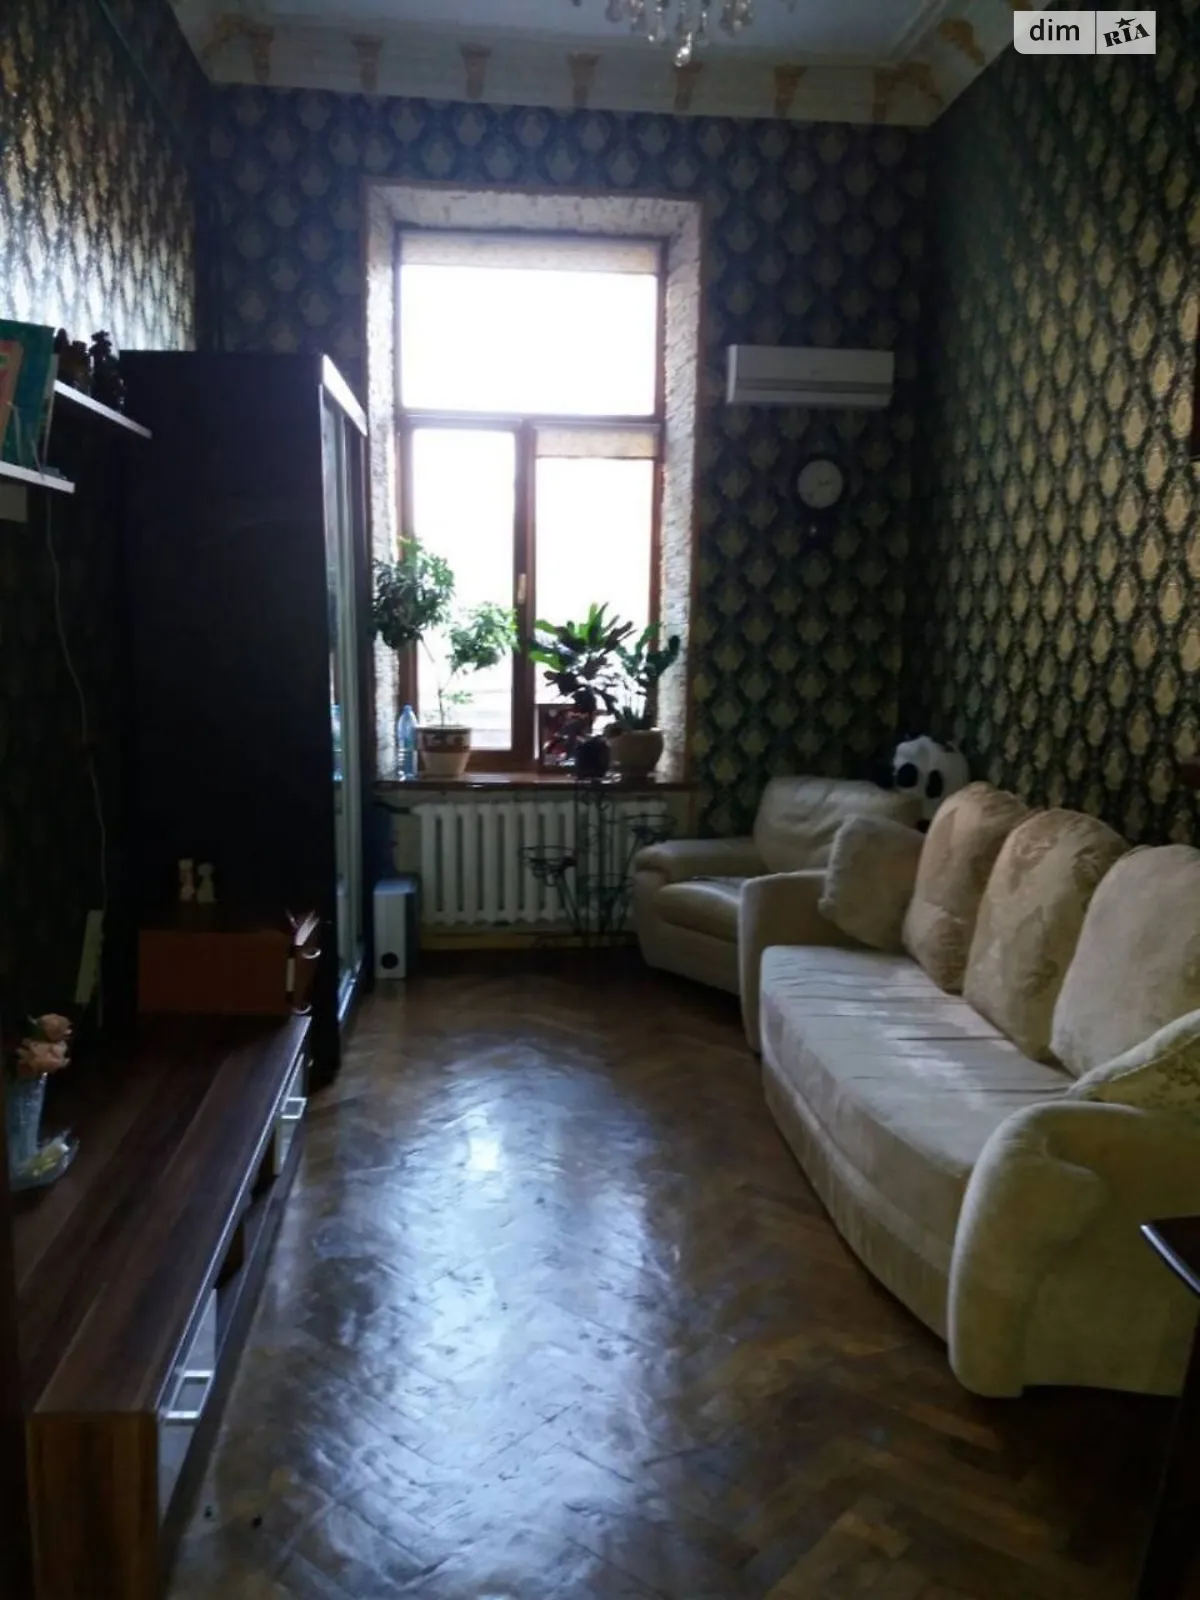 Продается комната 20 кв. м в Одессе, цена: 20000 $ - фото 1